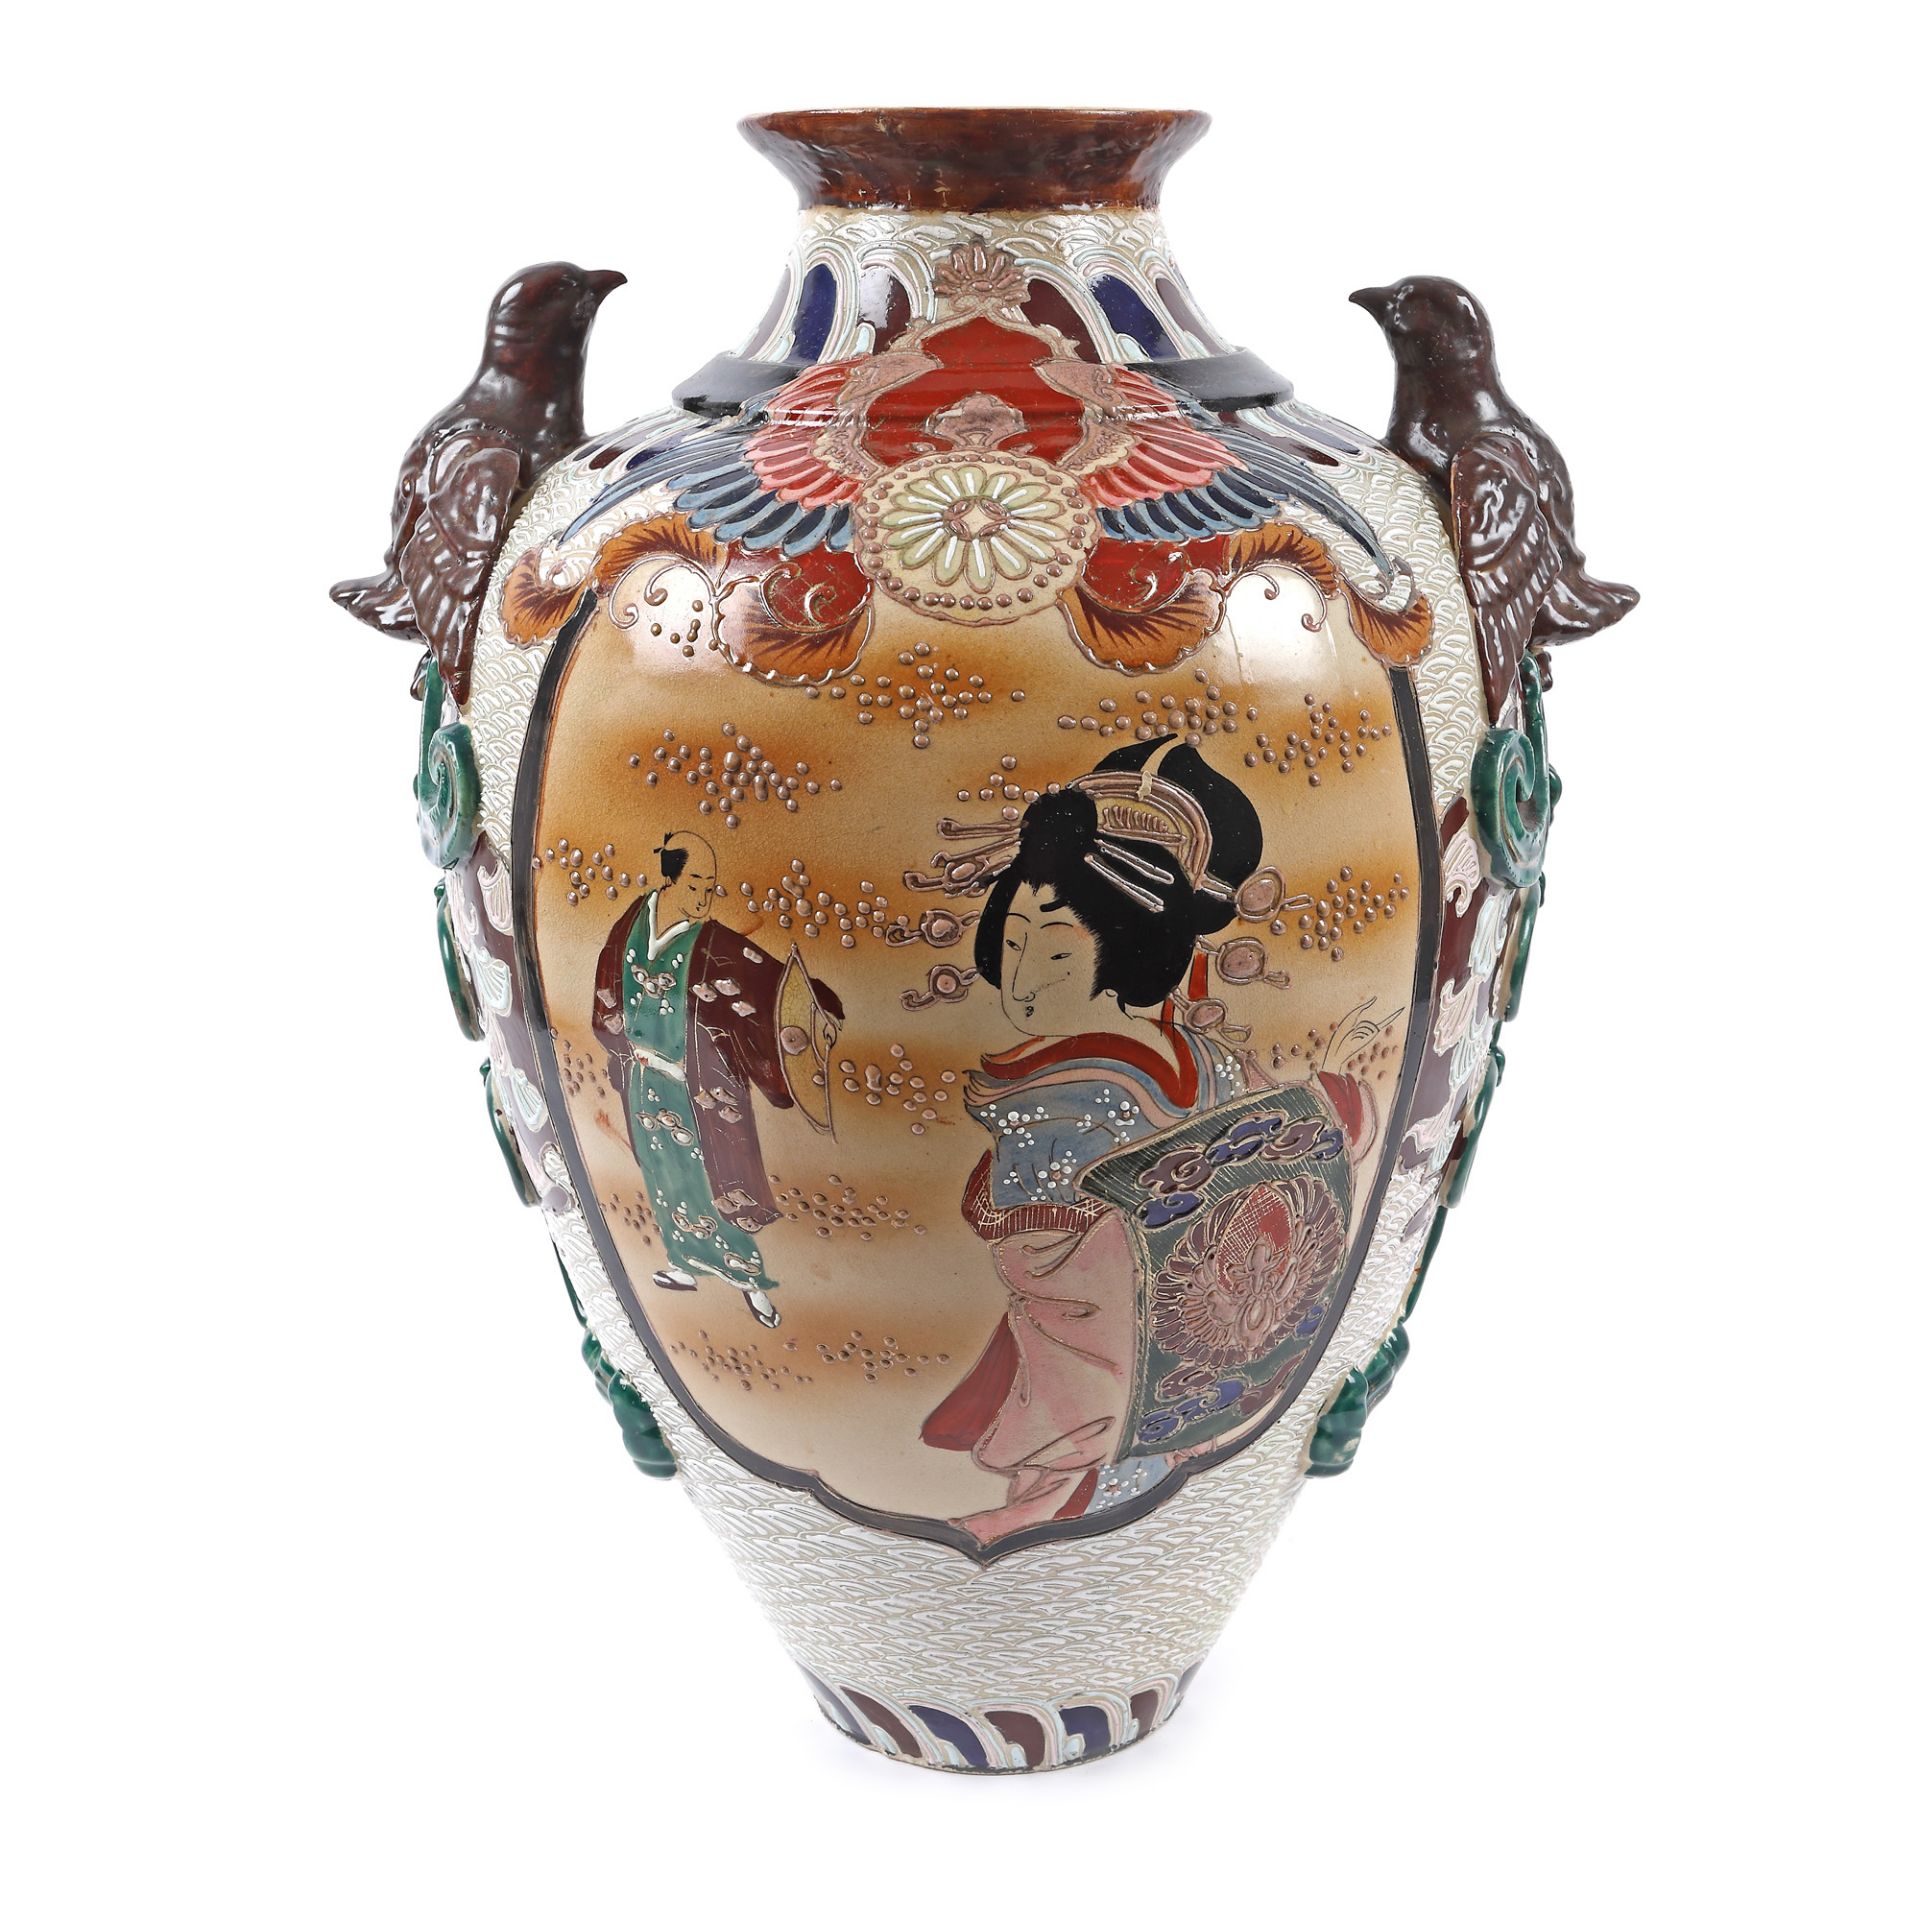 Satsuma vessel made of painted ceramics, decorated with samurai and nightingales, Japan